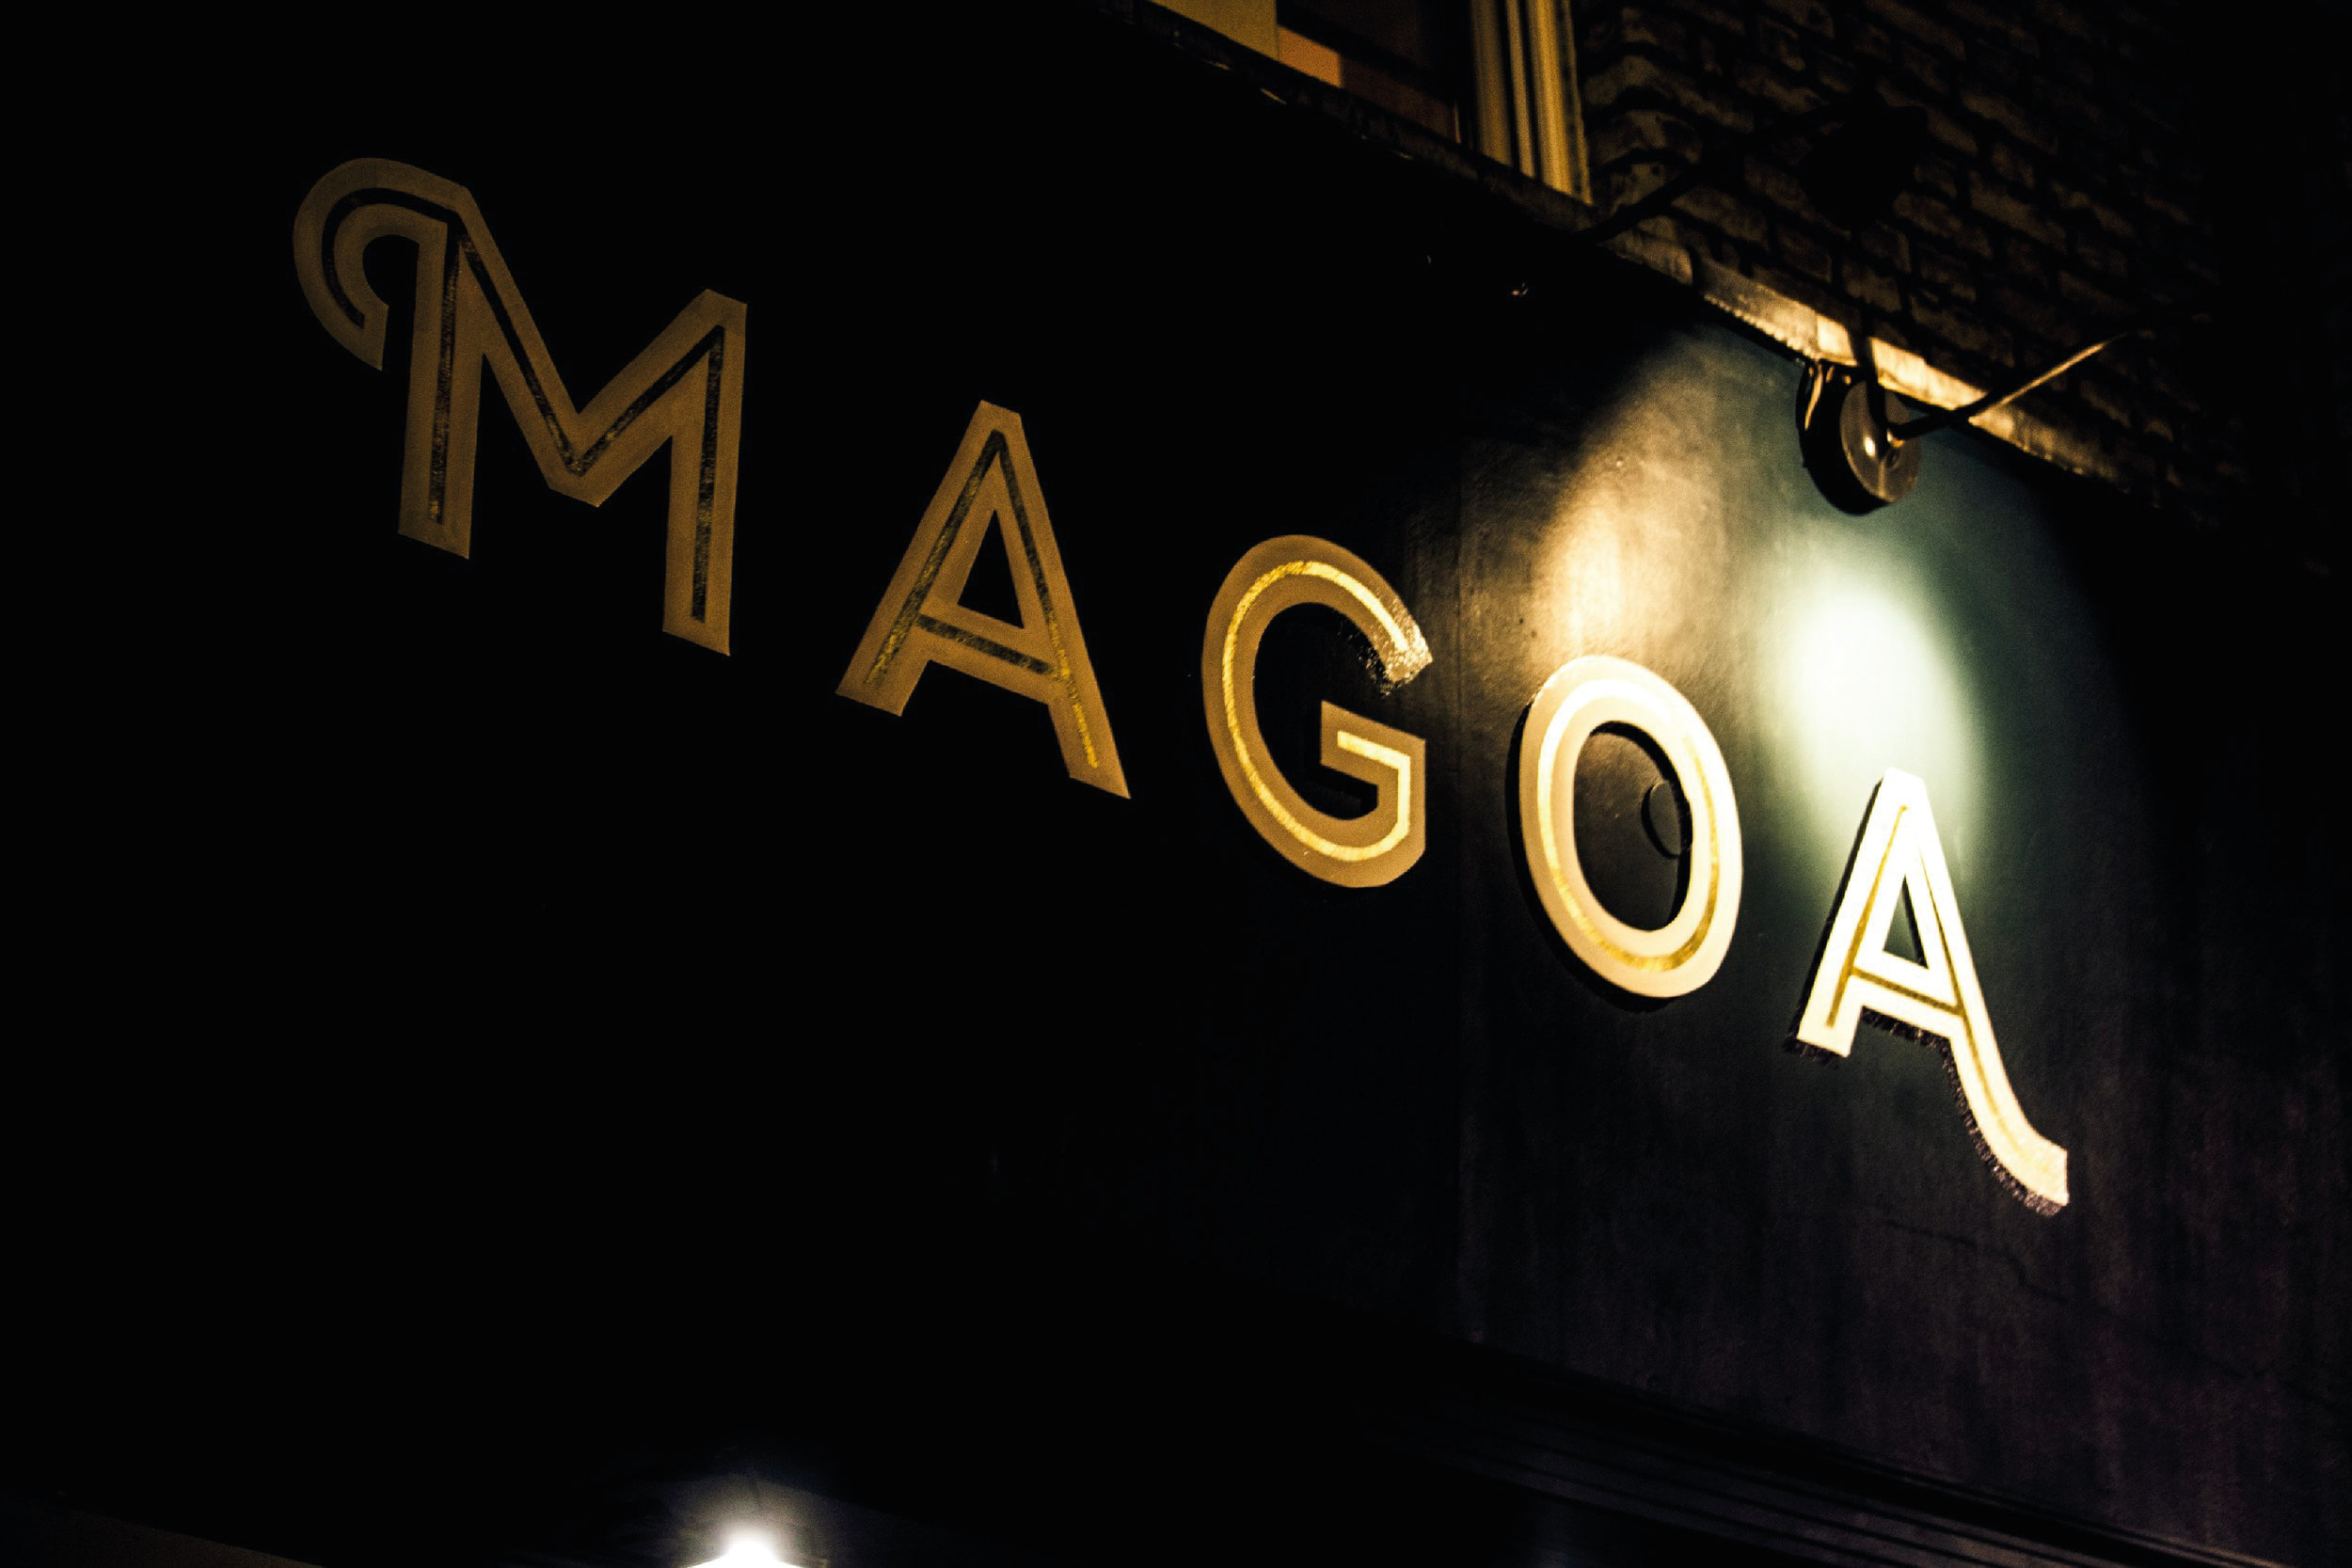 Graphic Designer London. Magoa restaurant sign in black background